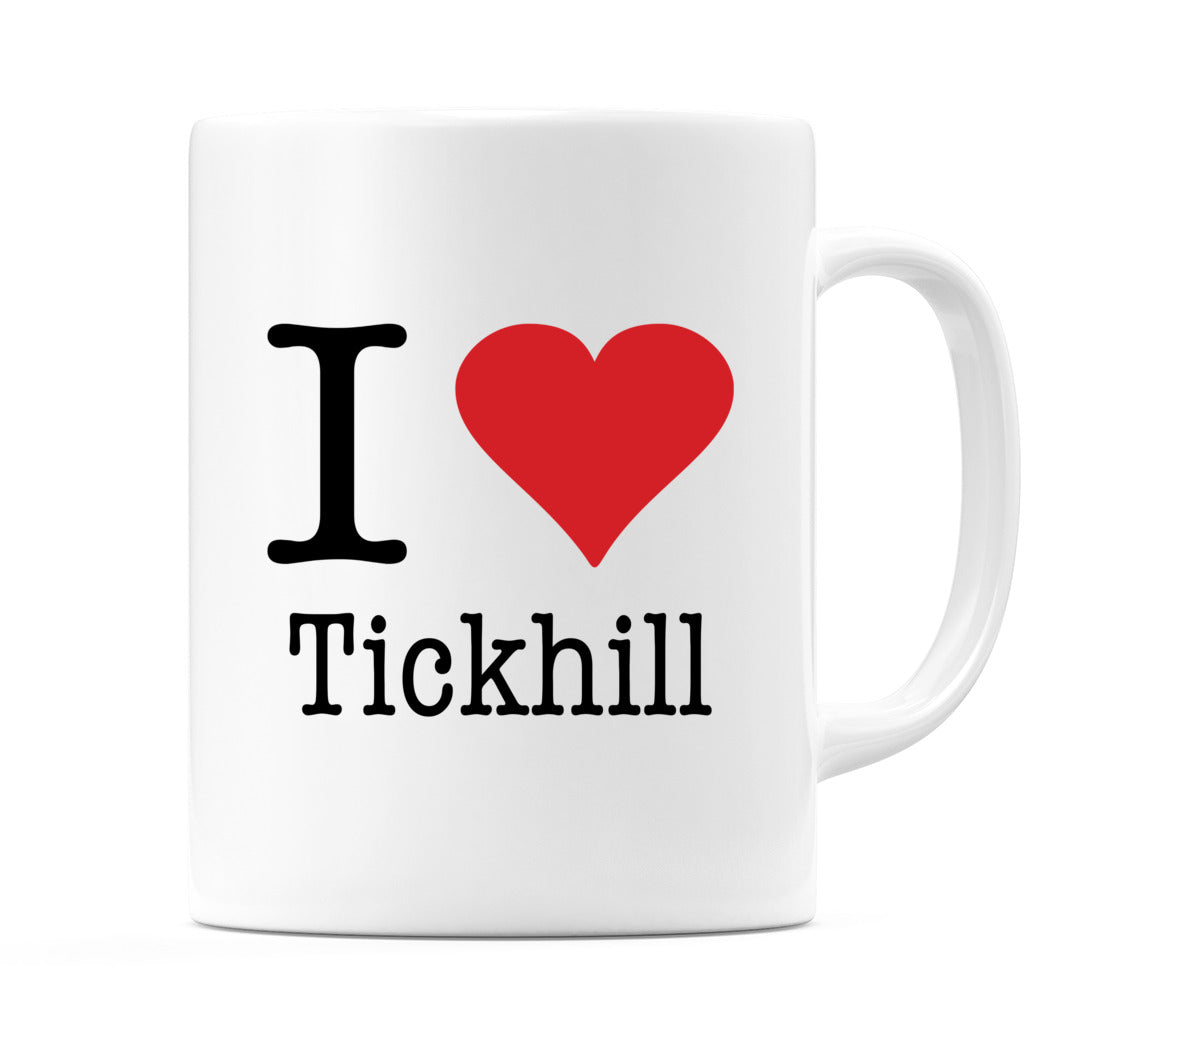 I Love Tickhill Mug